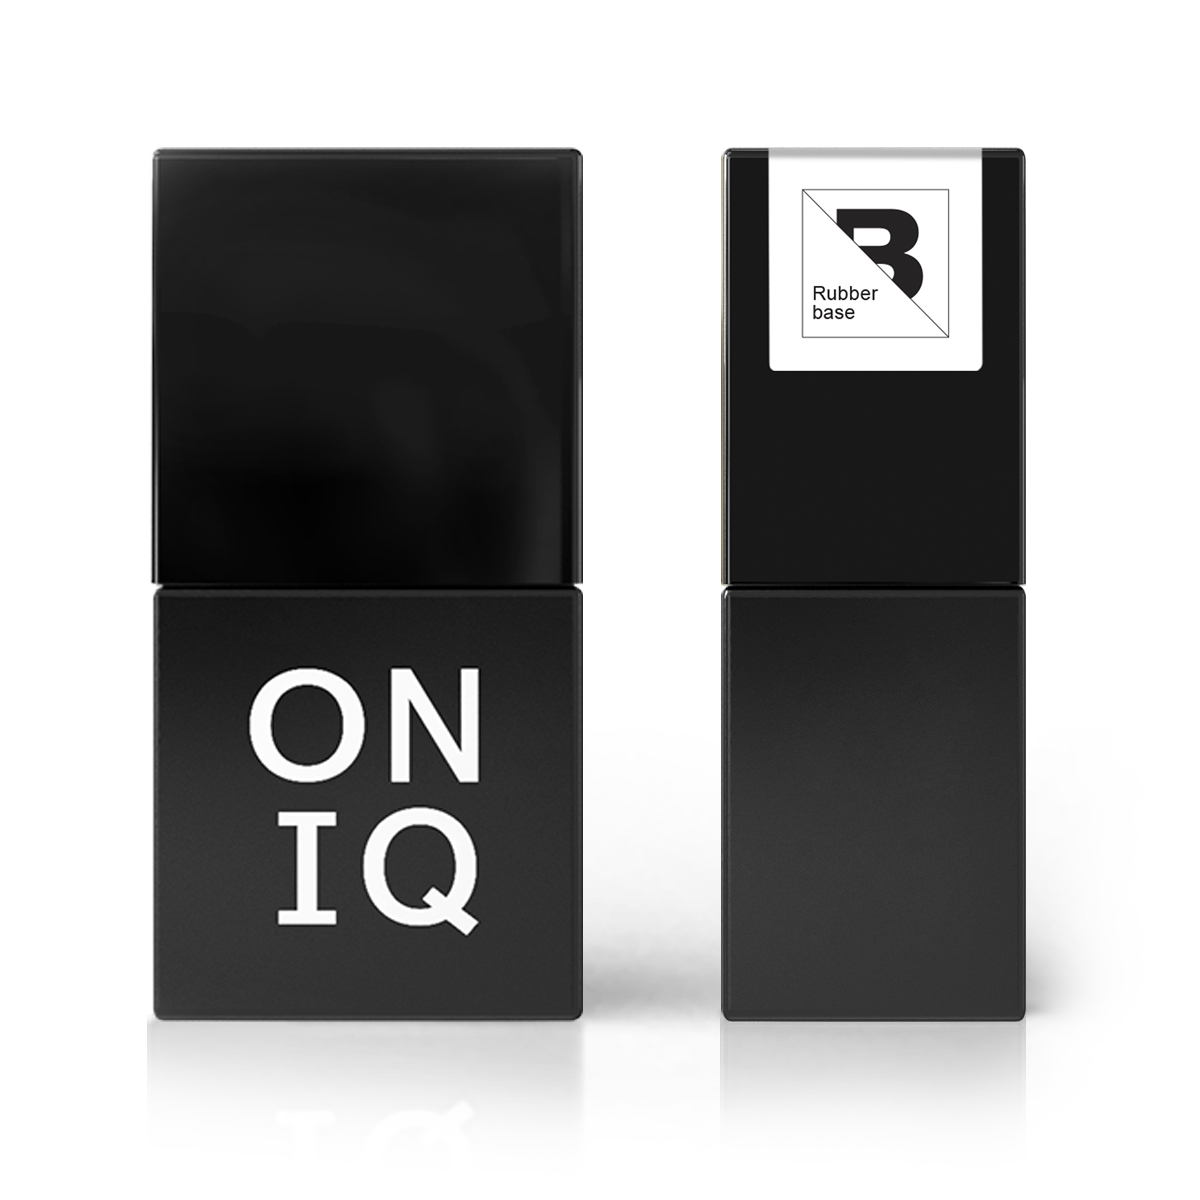 ONIQ Покрытие базовое, прозрачное каучуковое / Rubber base 1